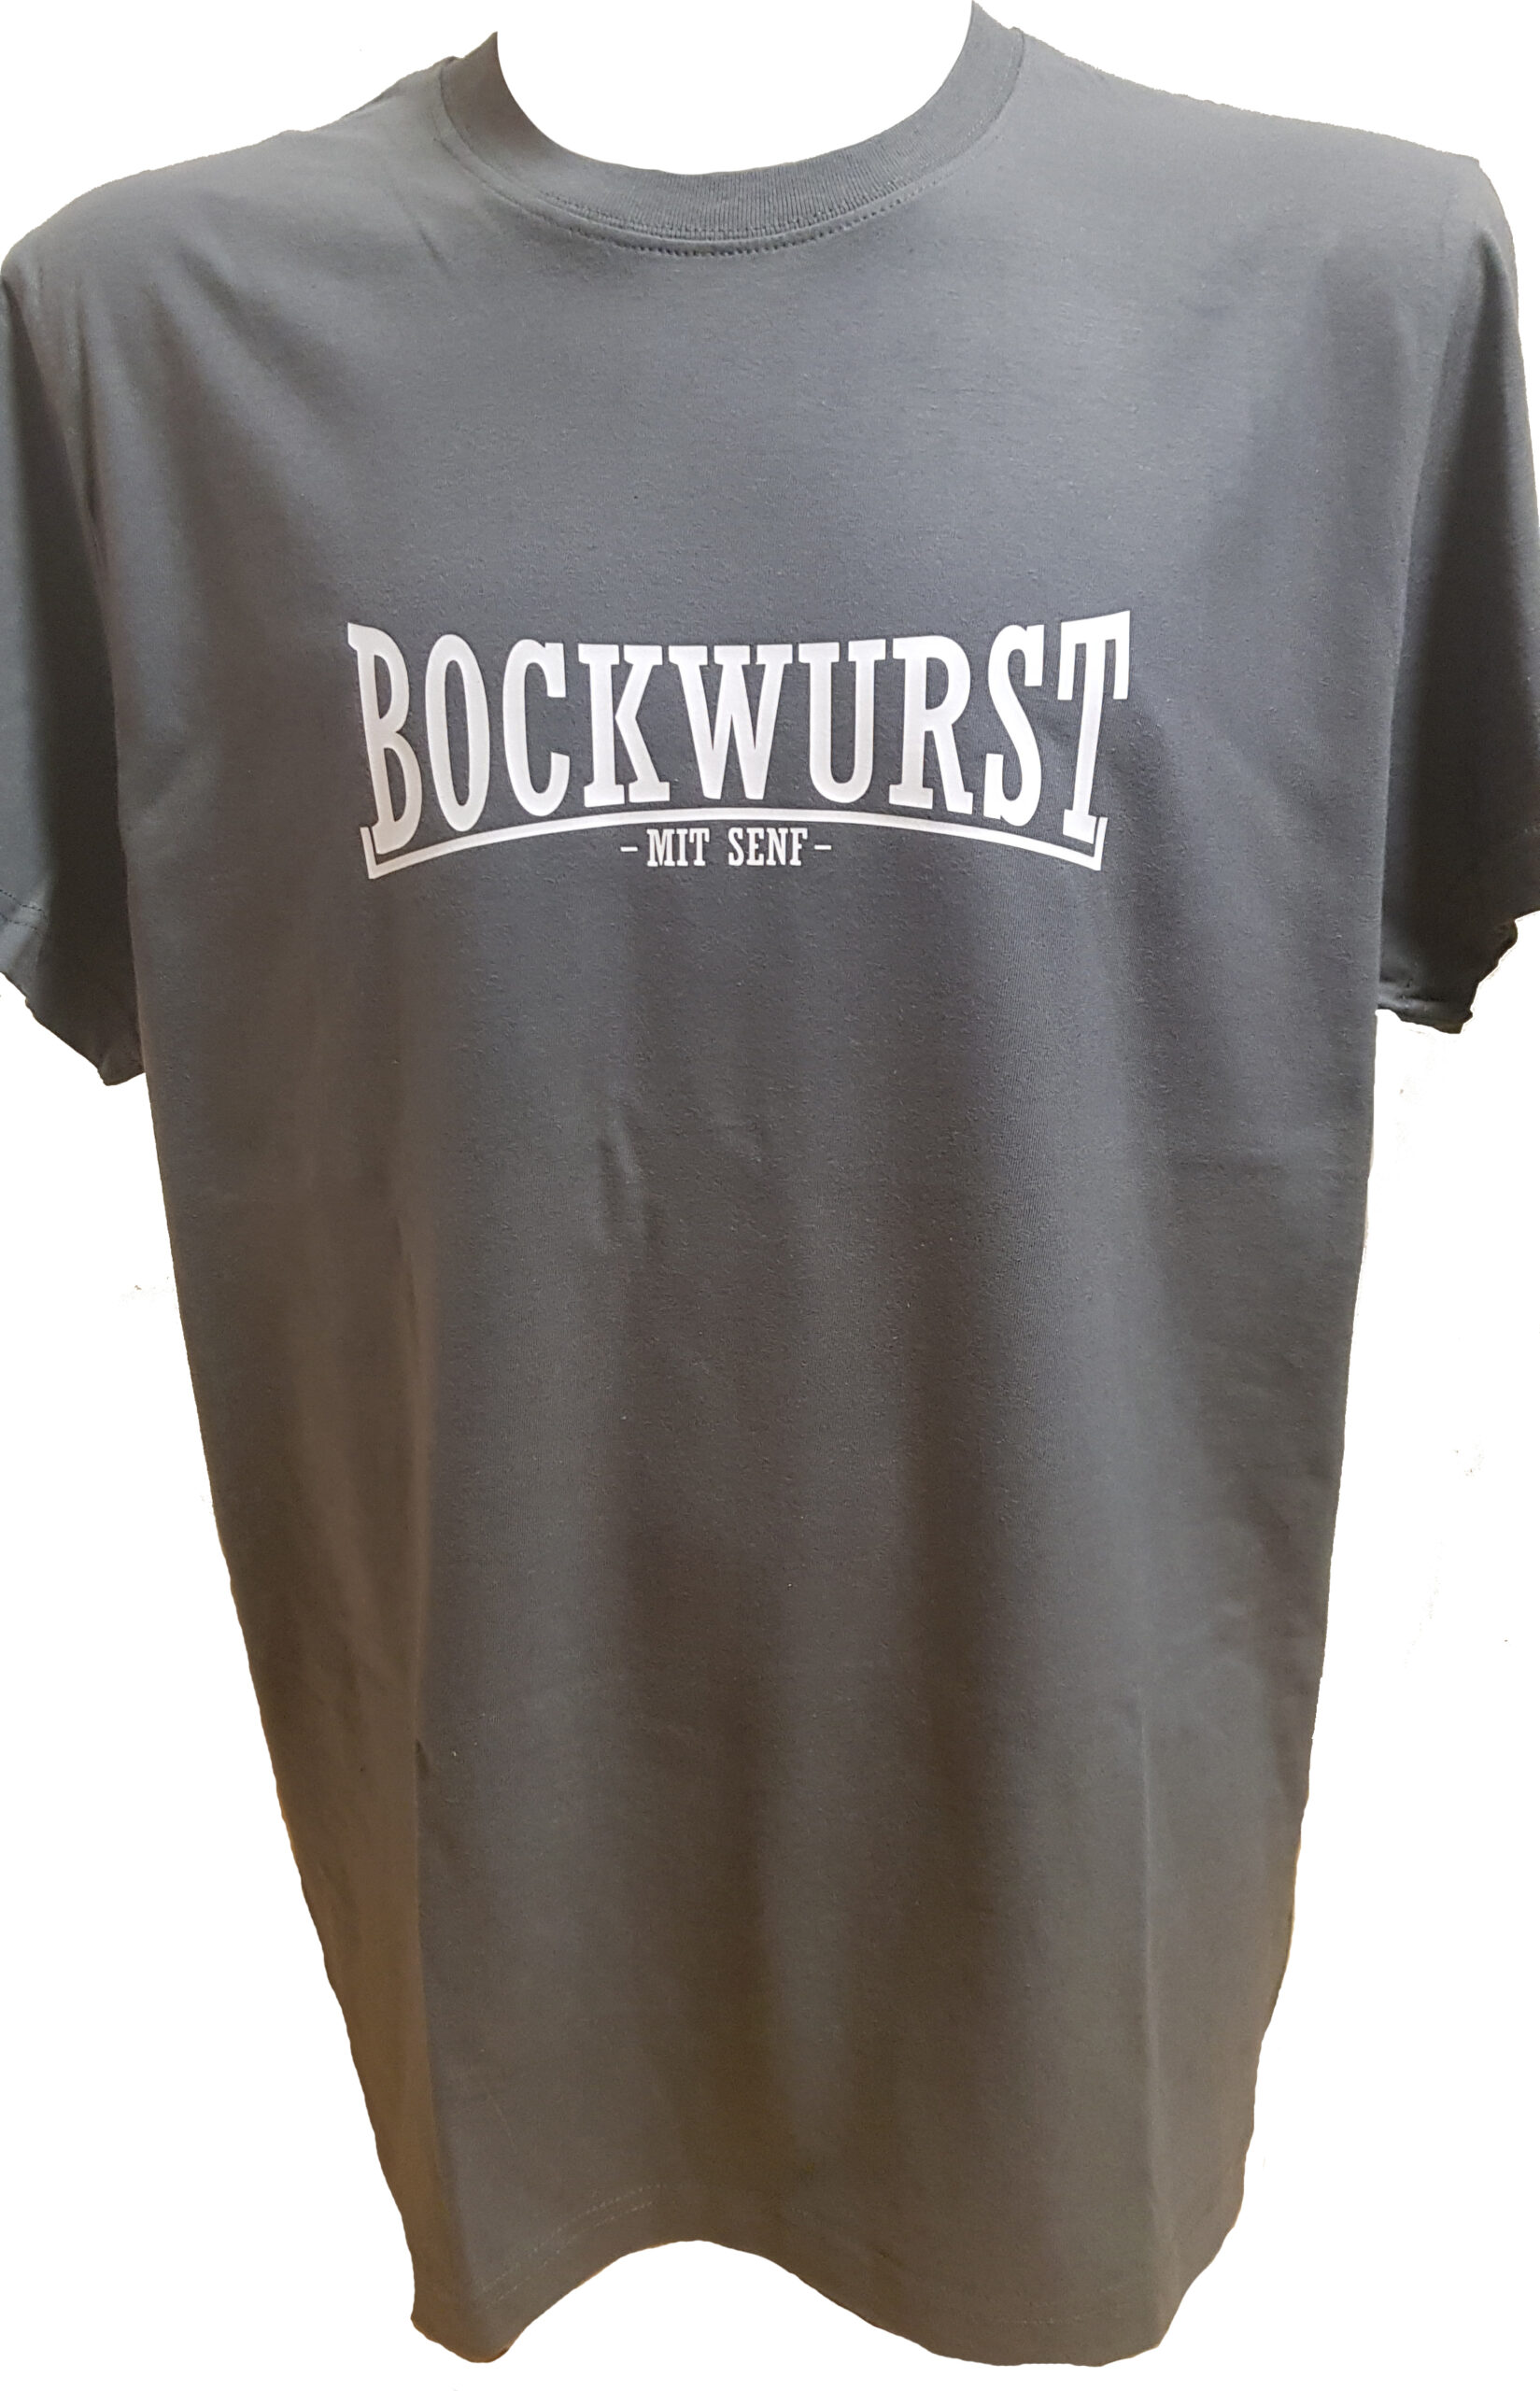 T-Shirt Bockwurst mit Merchandise – Shadow Senf